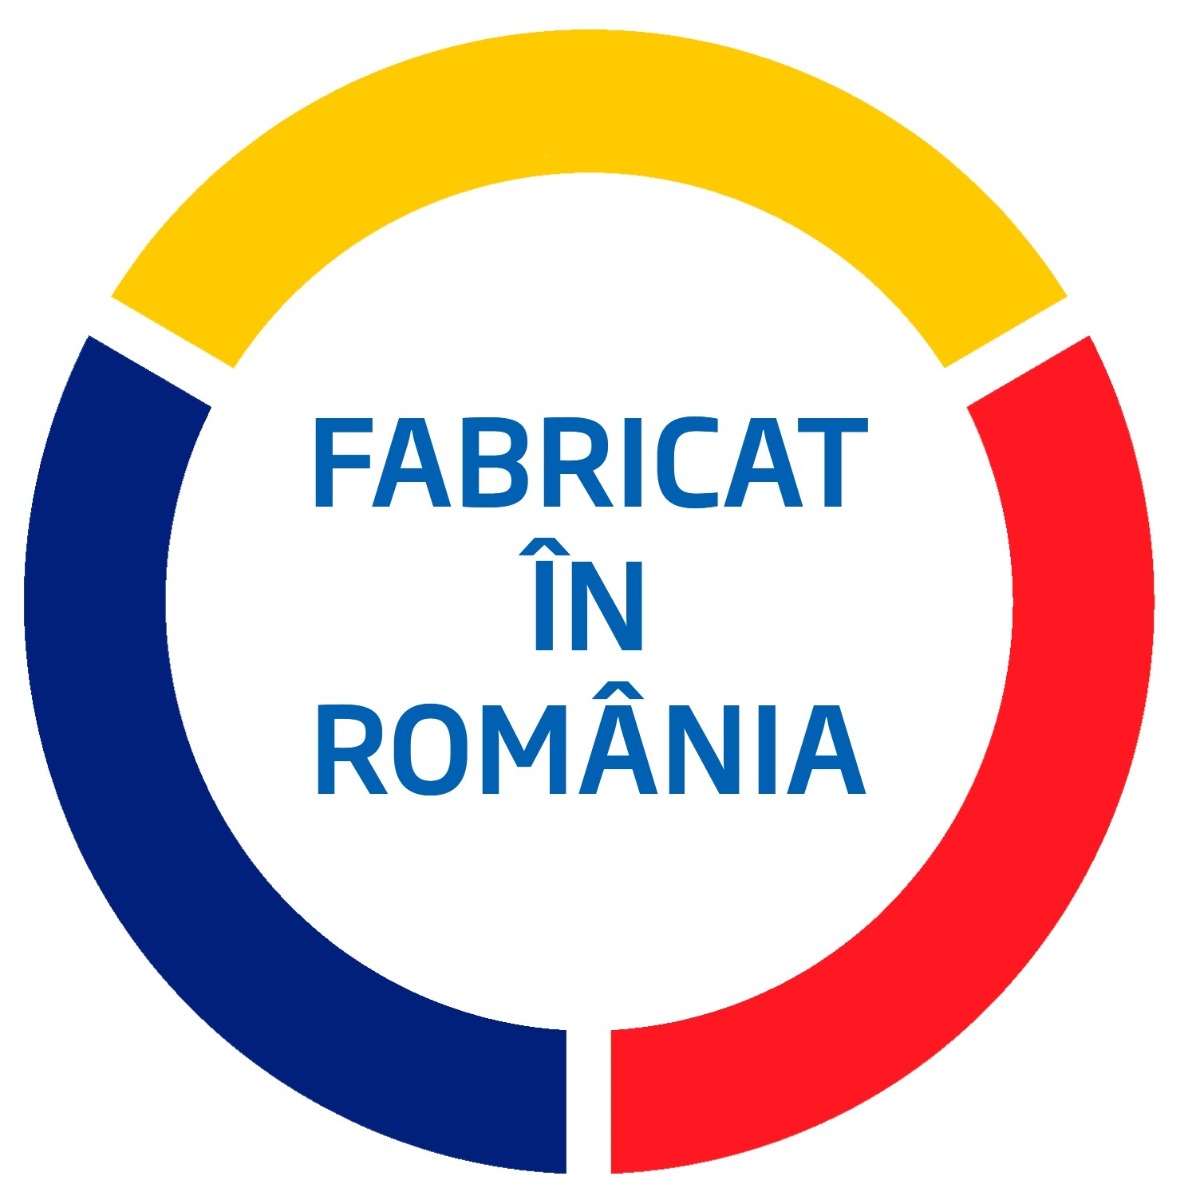 Fabricat in Romania